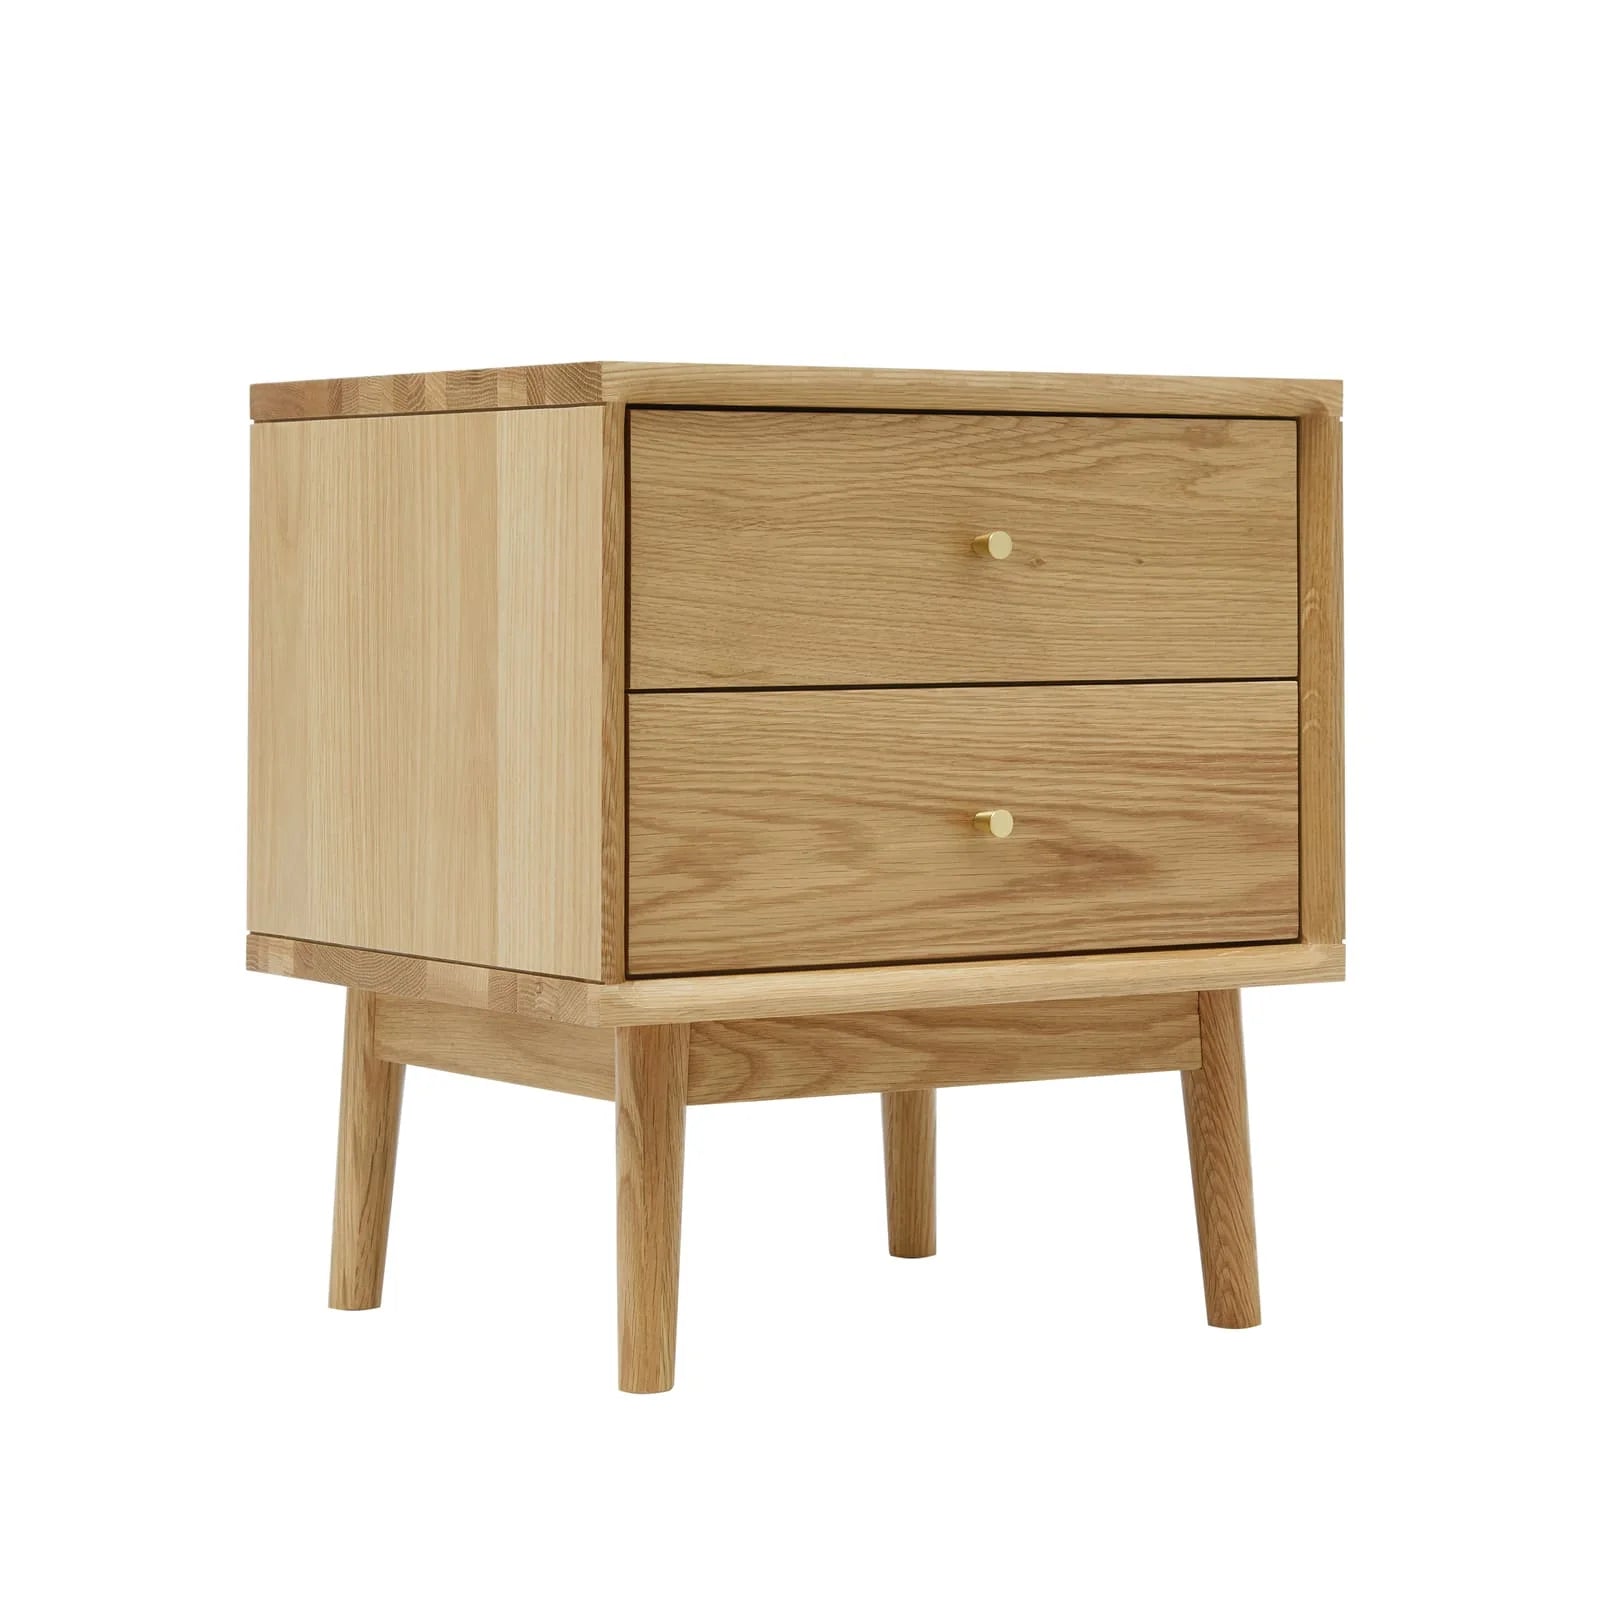 Wright oak 2 drawer bedside table | malletandplane.com